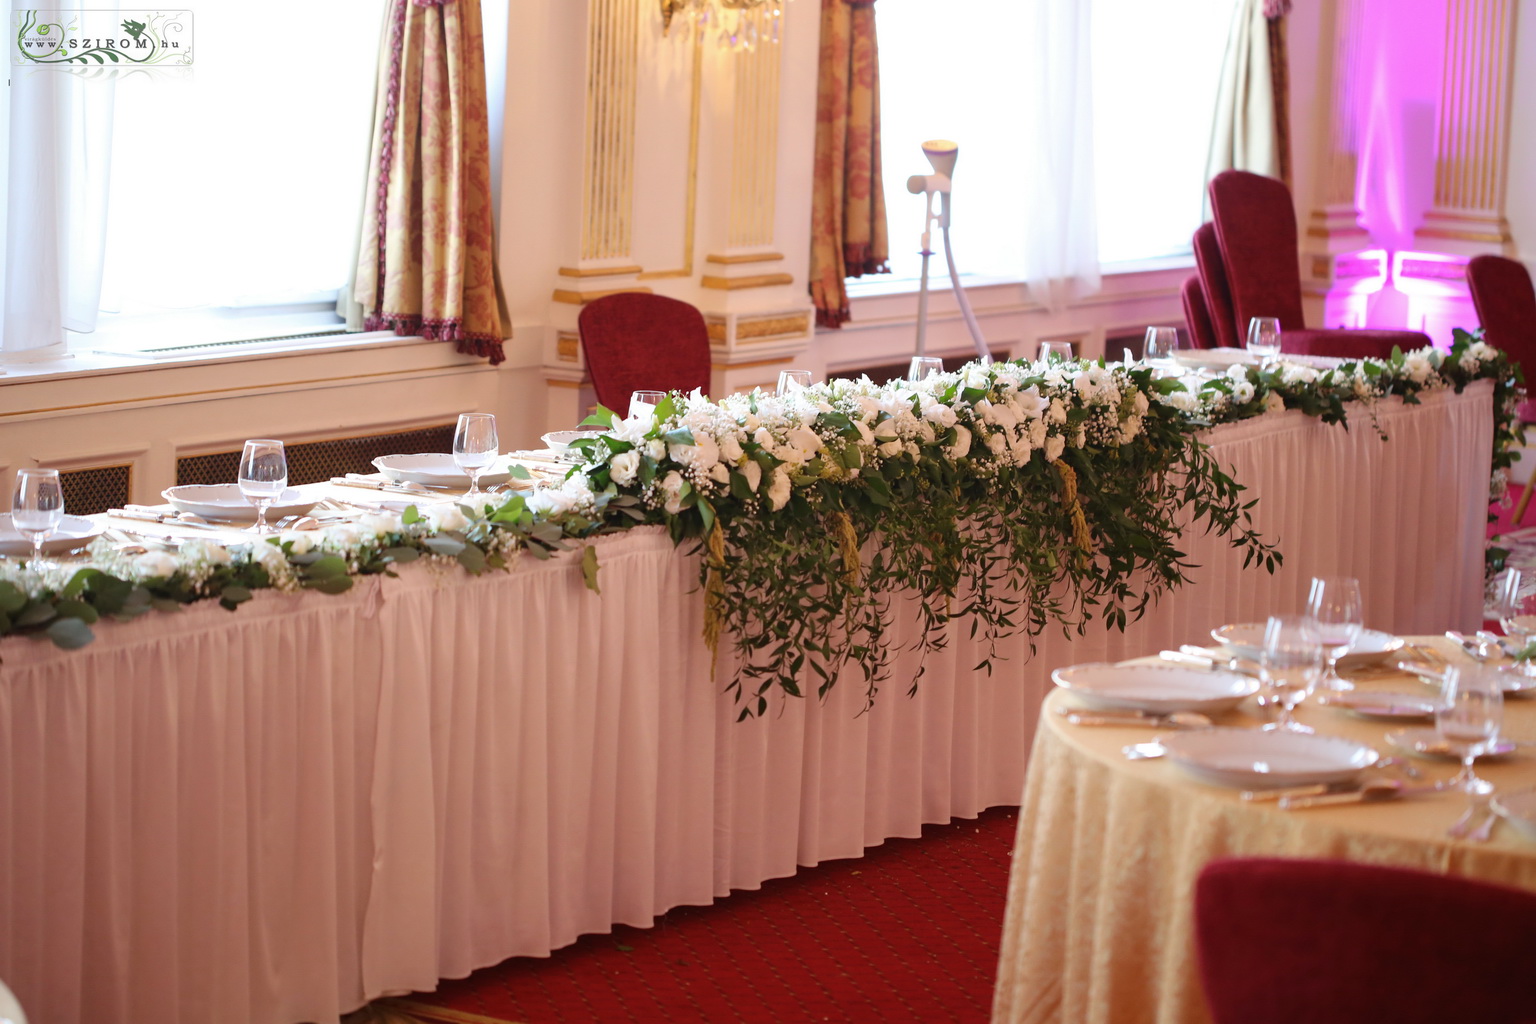 flower delivery Budapest - Main table centerpiece Gundel (lisianthus, gladiolus, babybreath, white)